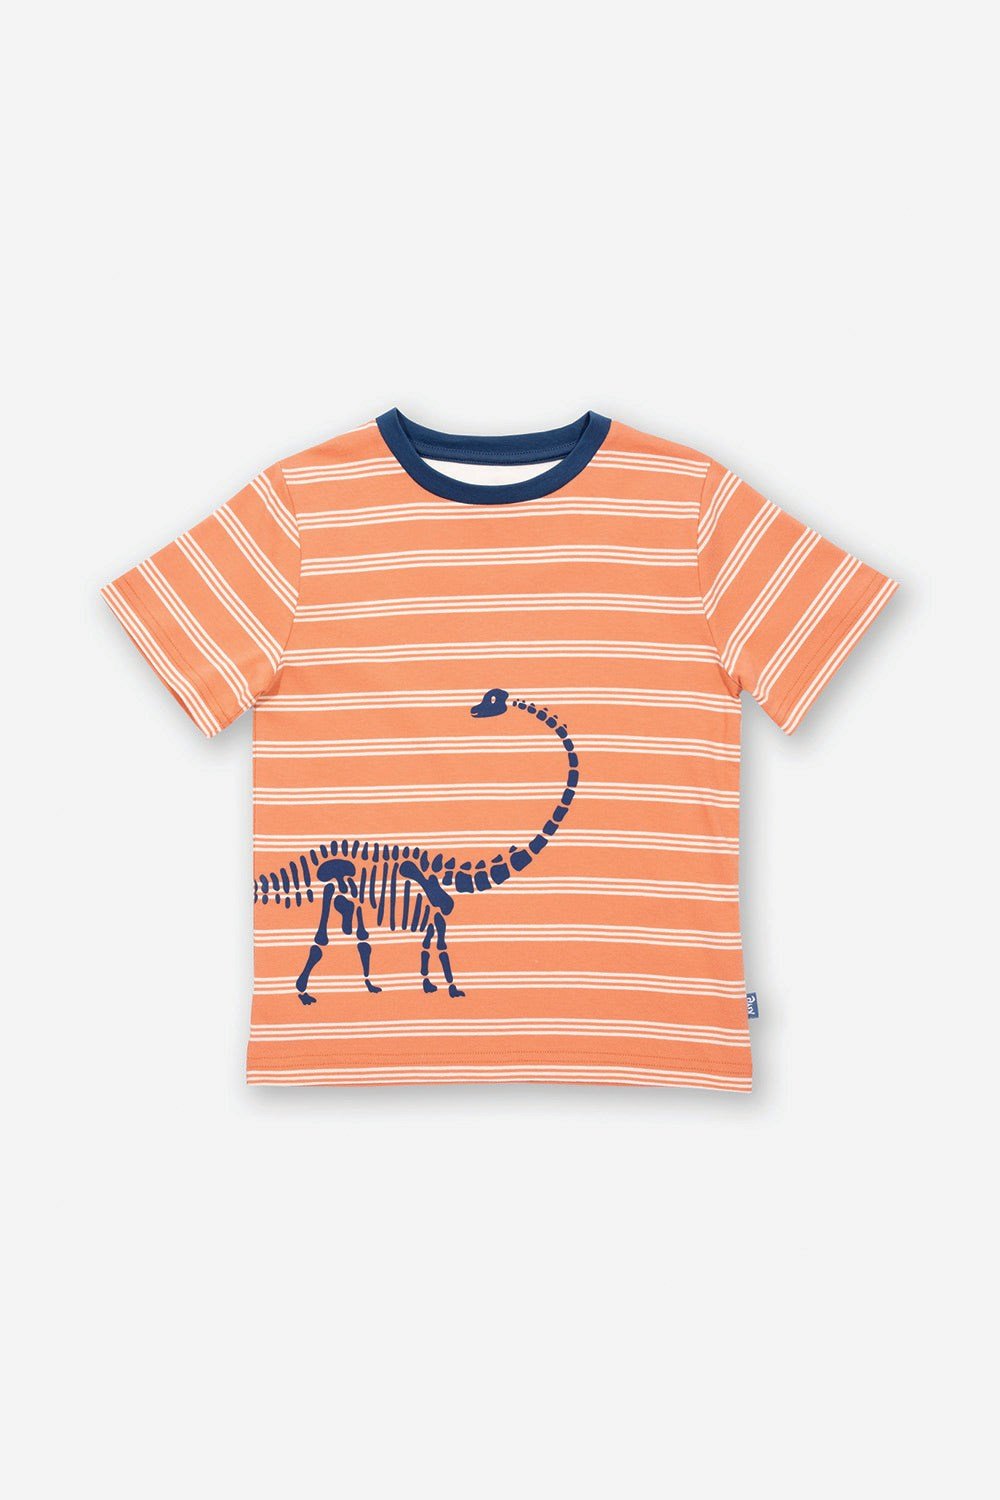 Dippy The Dino Baby/kids Organic Cotton T-shirt -